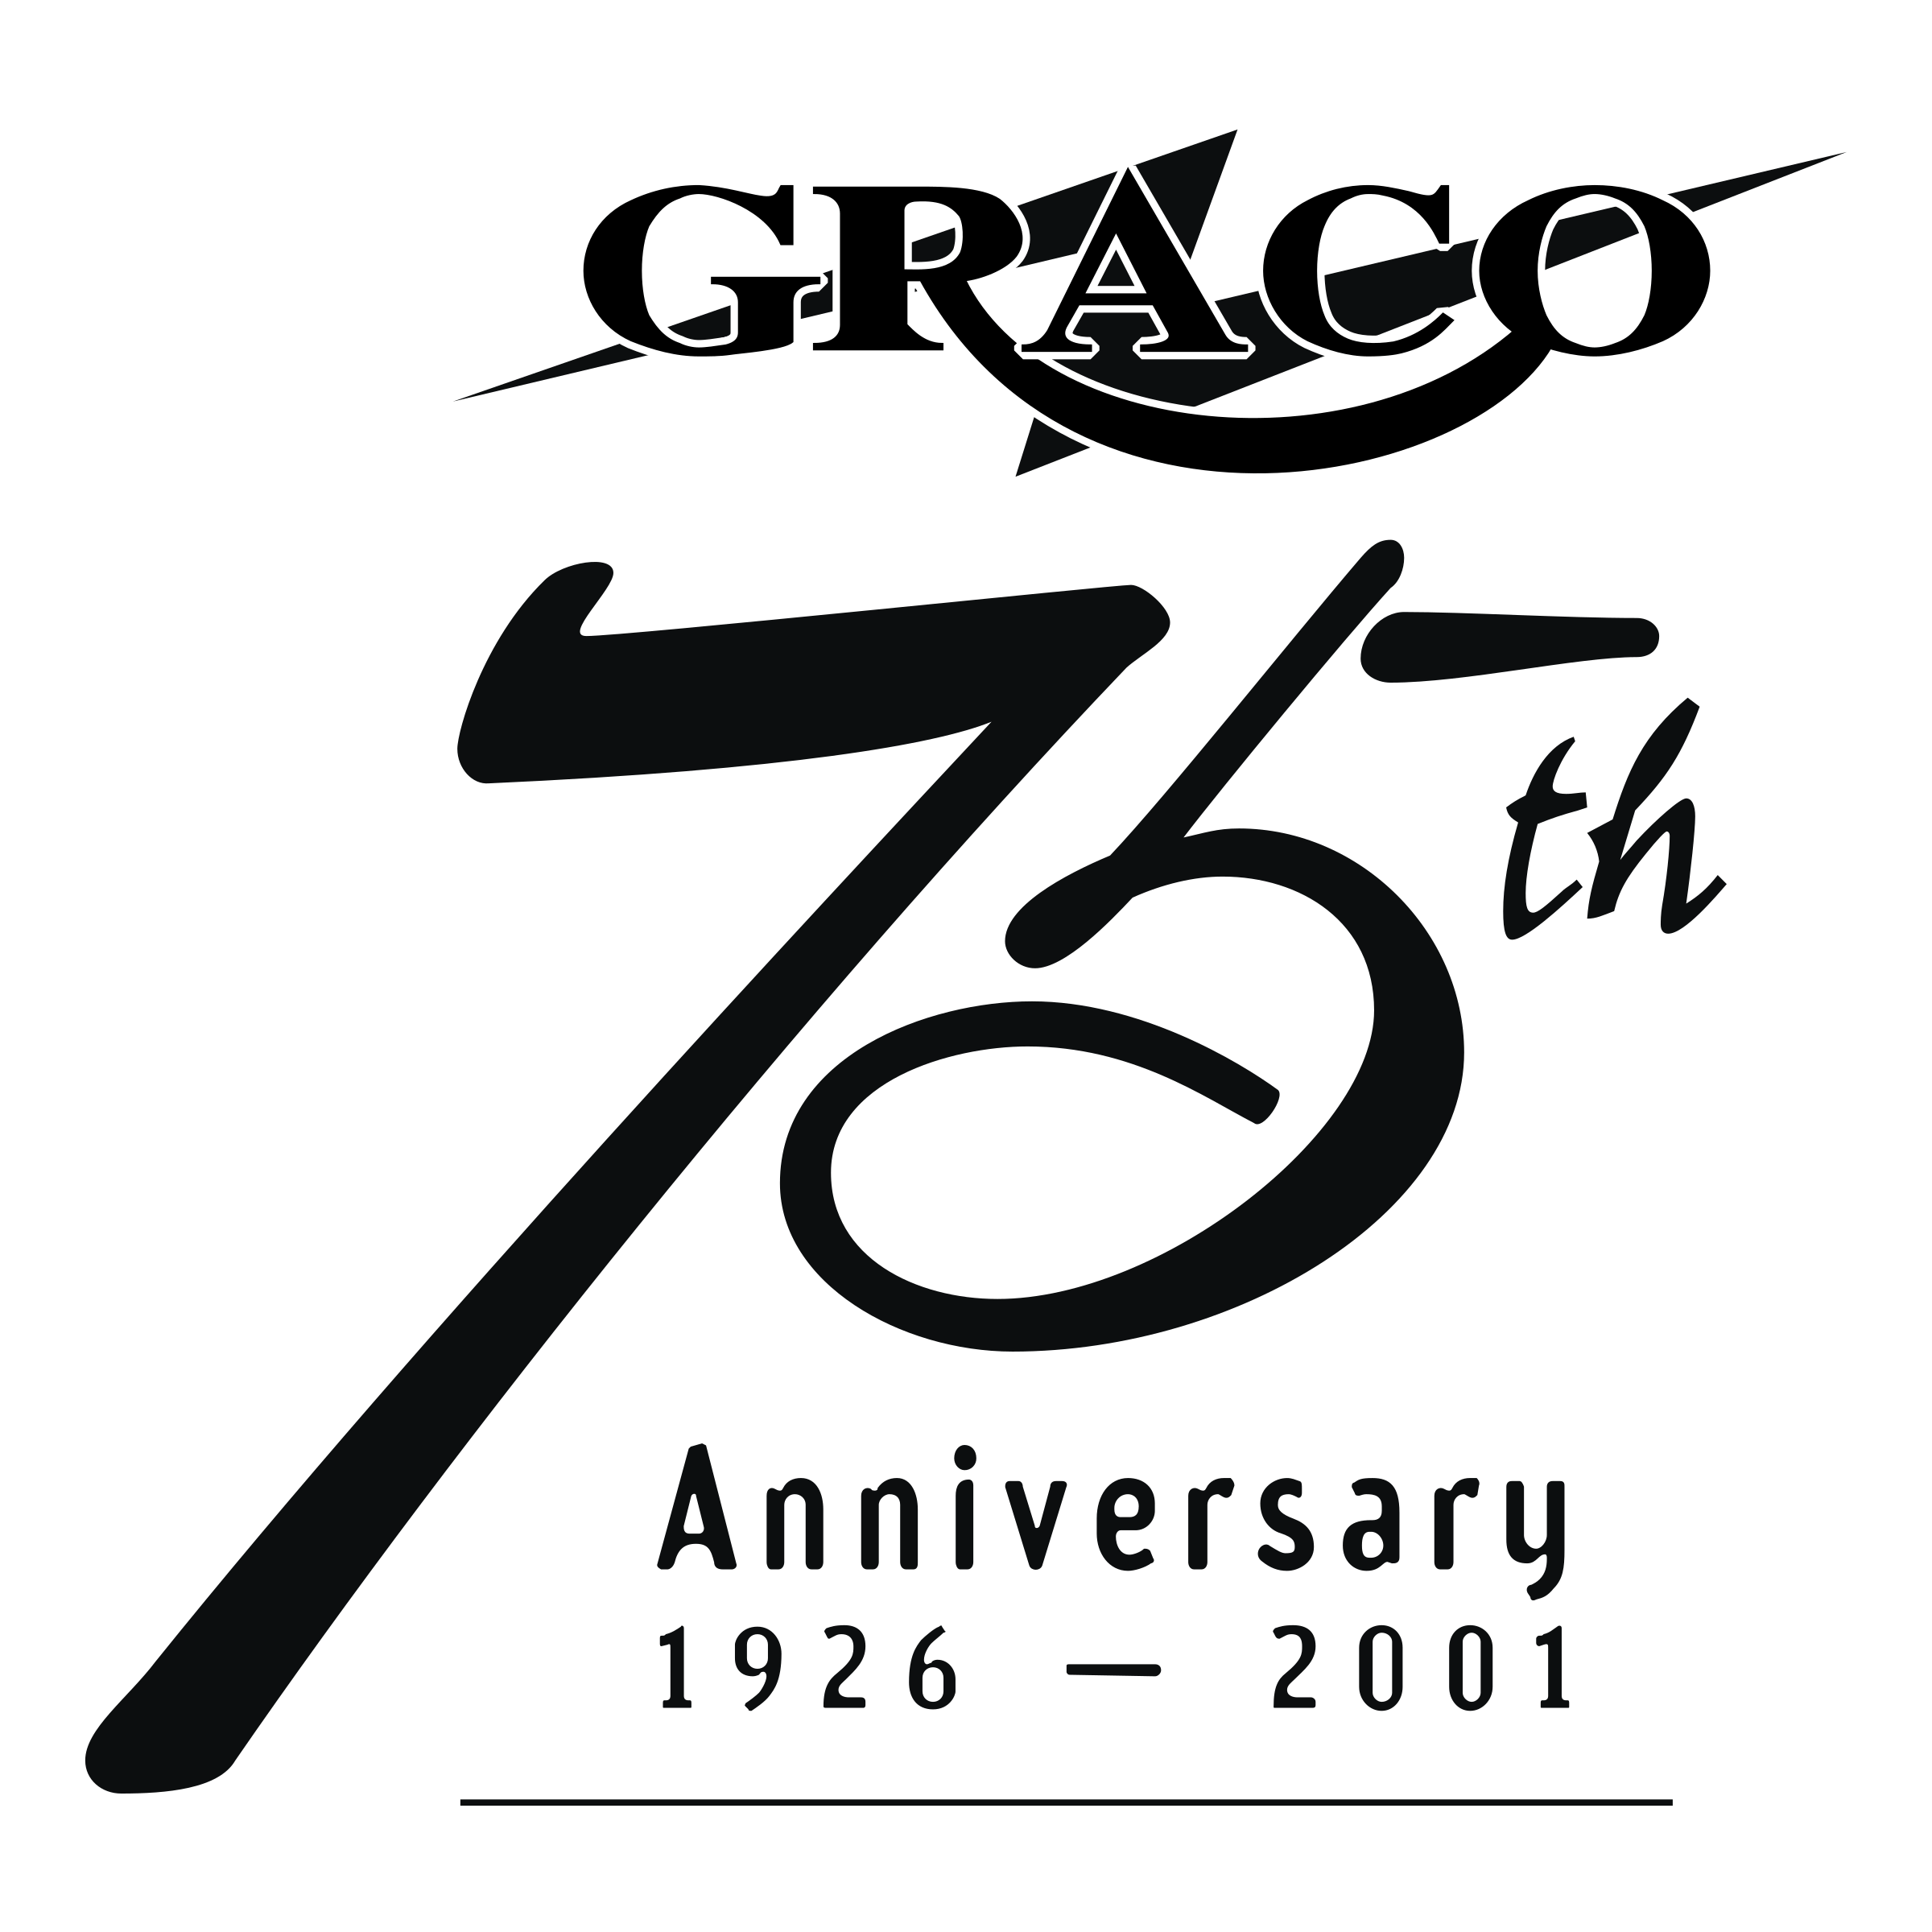 Graco Logo - Graco Logo PNG Transparent & SVG Vector - Freebie Supply